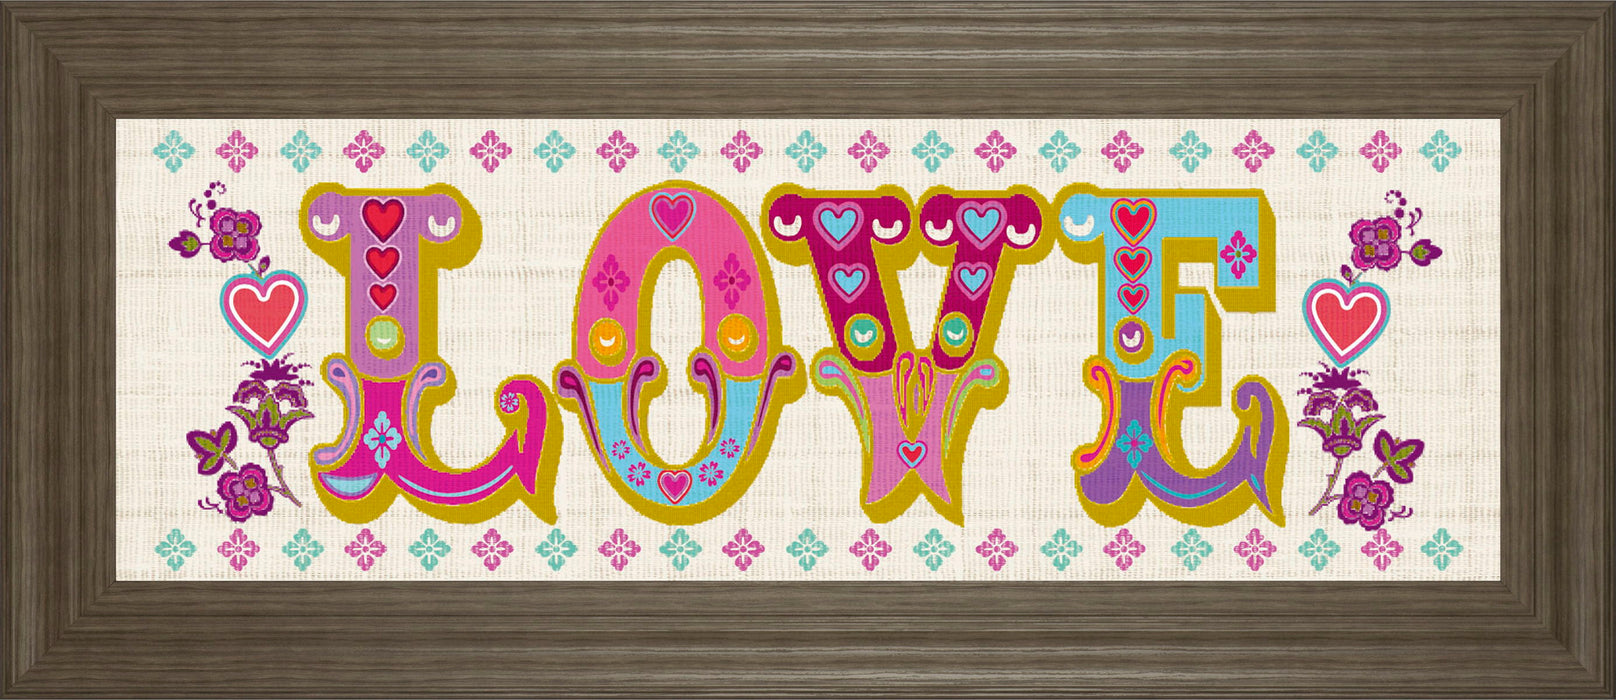 First Love By Tom Frazier - Framed Print Wall Art - Pink